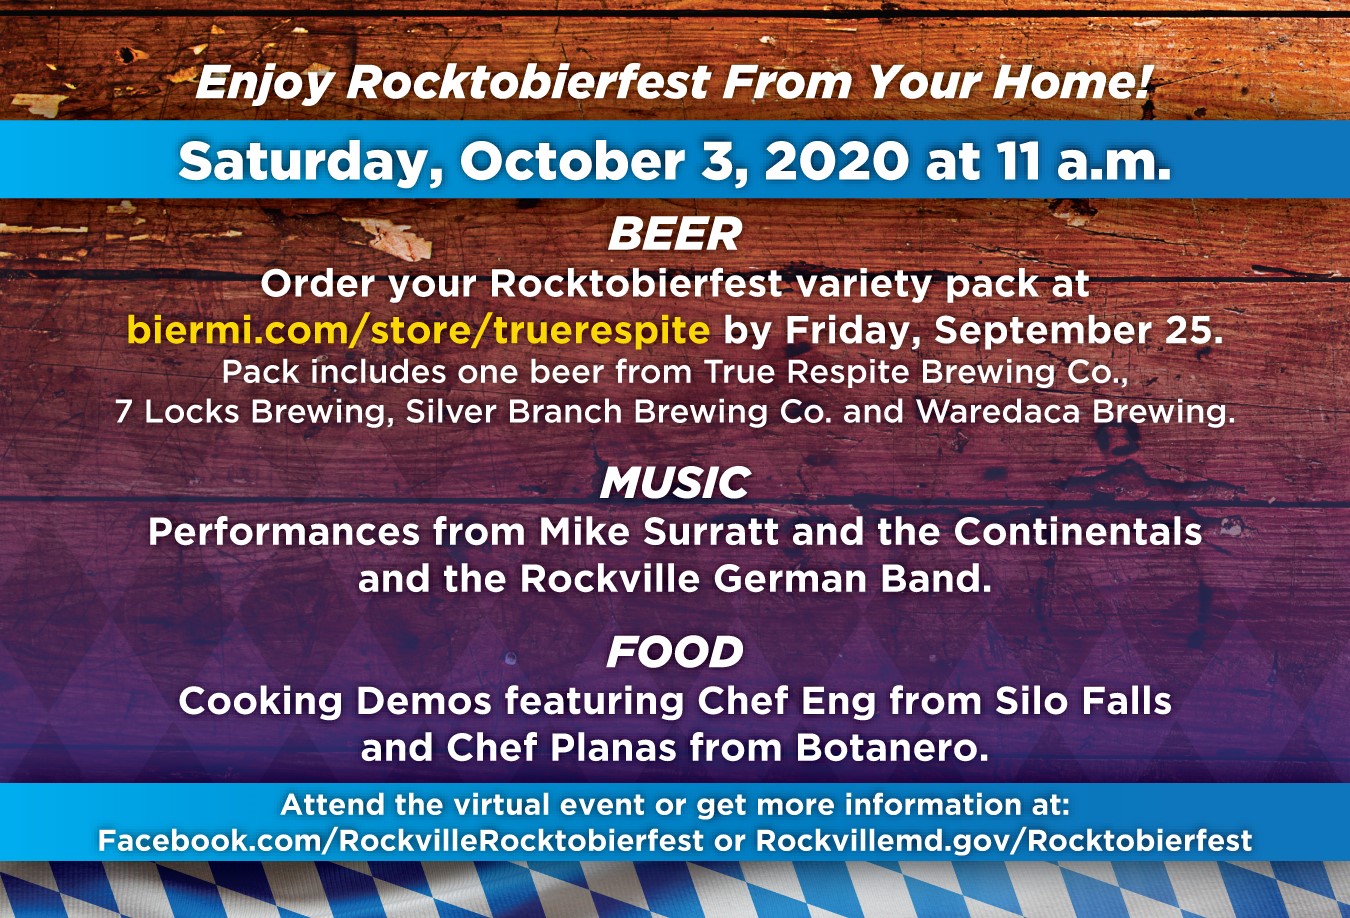 Gallery 5 - Rocktobierfest - A Virtual Celebration